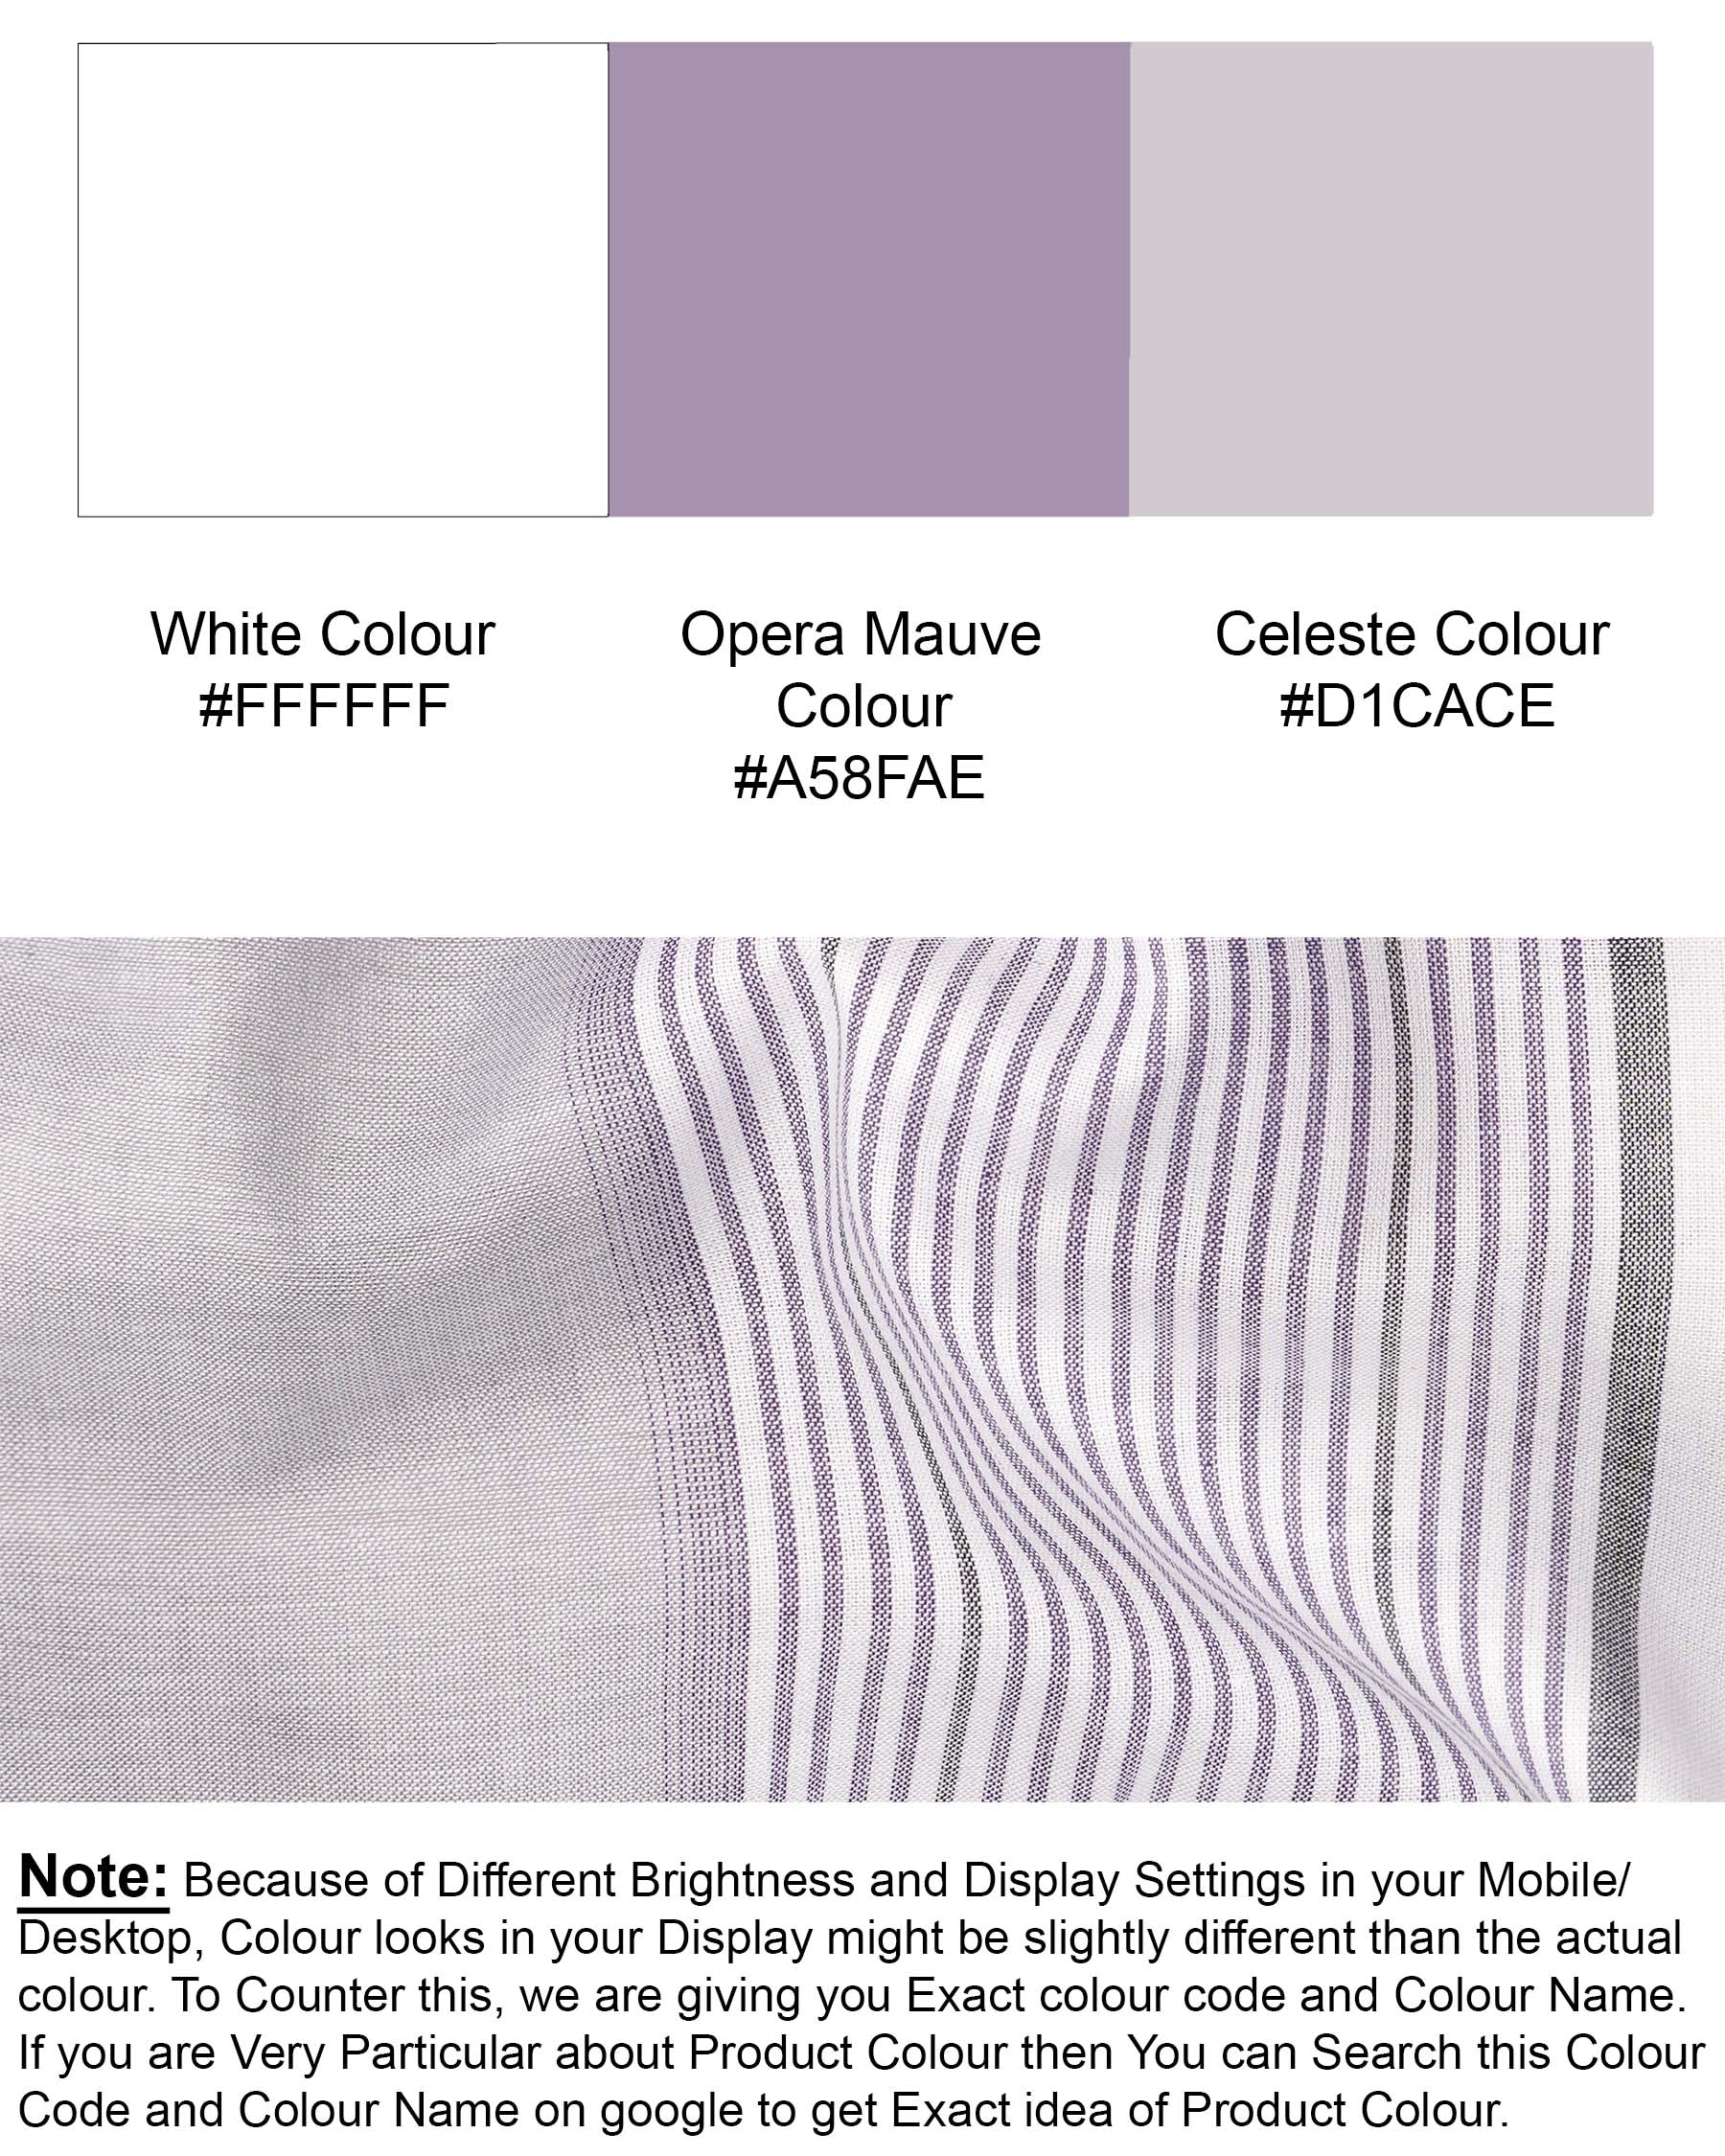 Celeste Gray with Opera Mauve Striped Premium Cotton Shirt 7162-38,7162-H-38,7162-39,7162-H-39,7162-40,7162-H-40,7162-42,7162-H-42,7162-44,7162-H-44,7162-46,7162-H-46,7162-48,7162-H-48,7162-50,7162-H-50,7162-52,7162-H-52